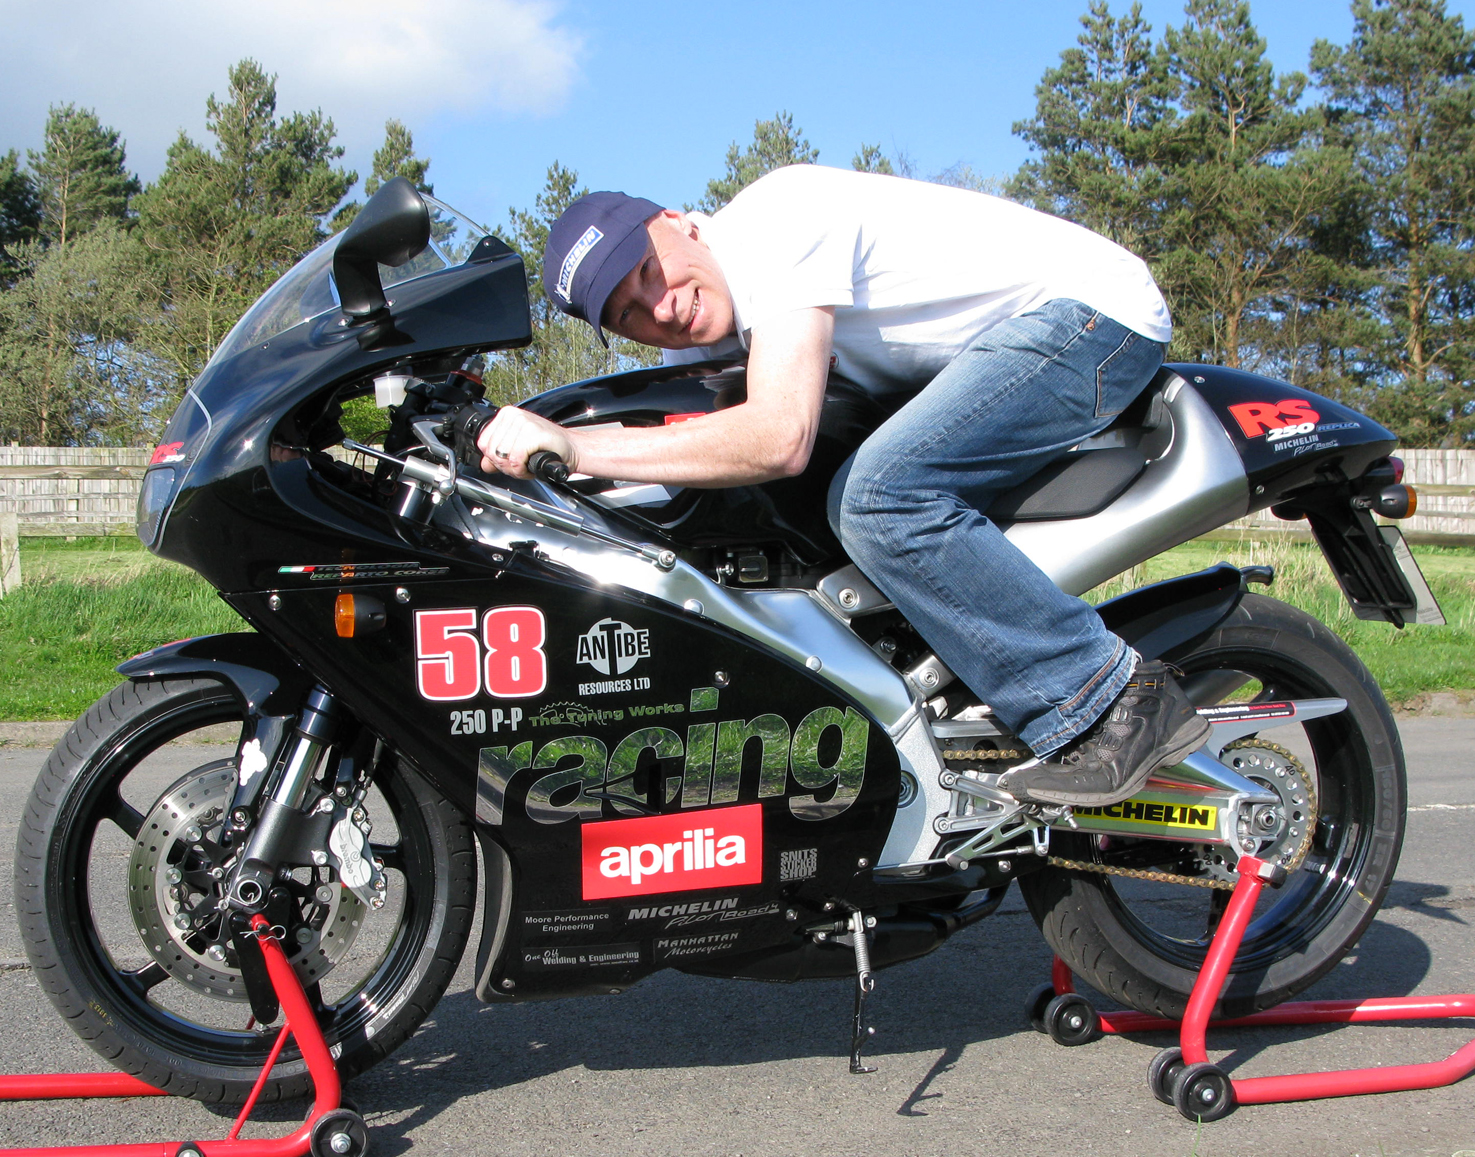 British rider attempting to break 250cc land speed record